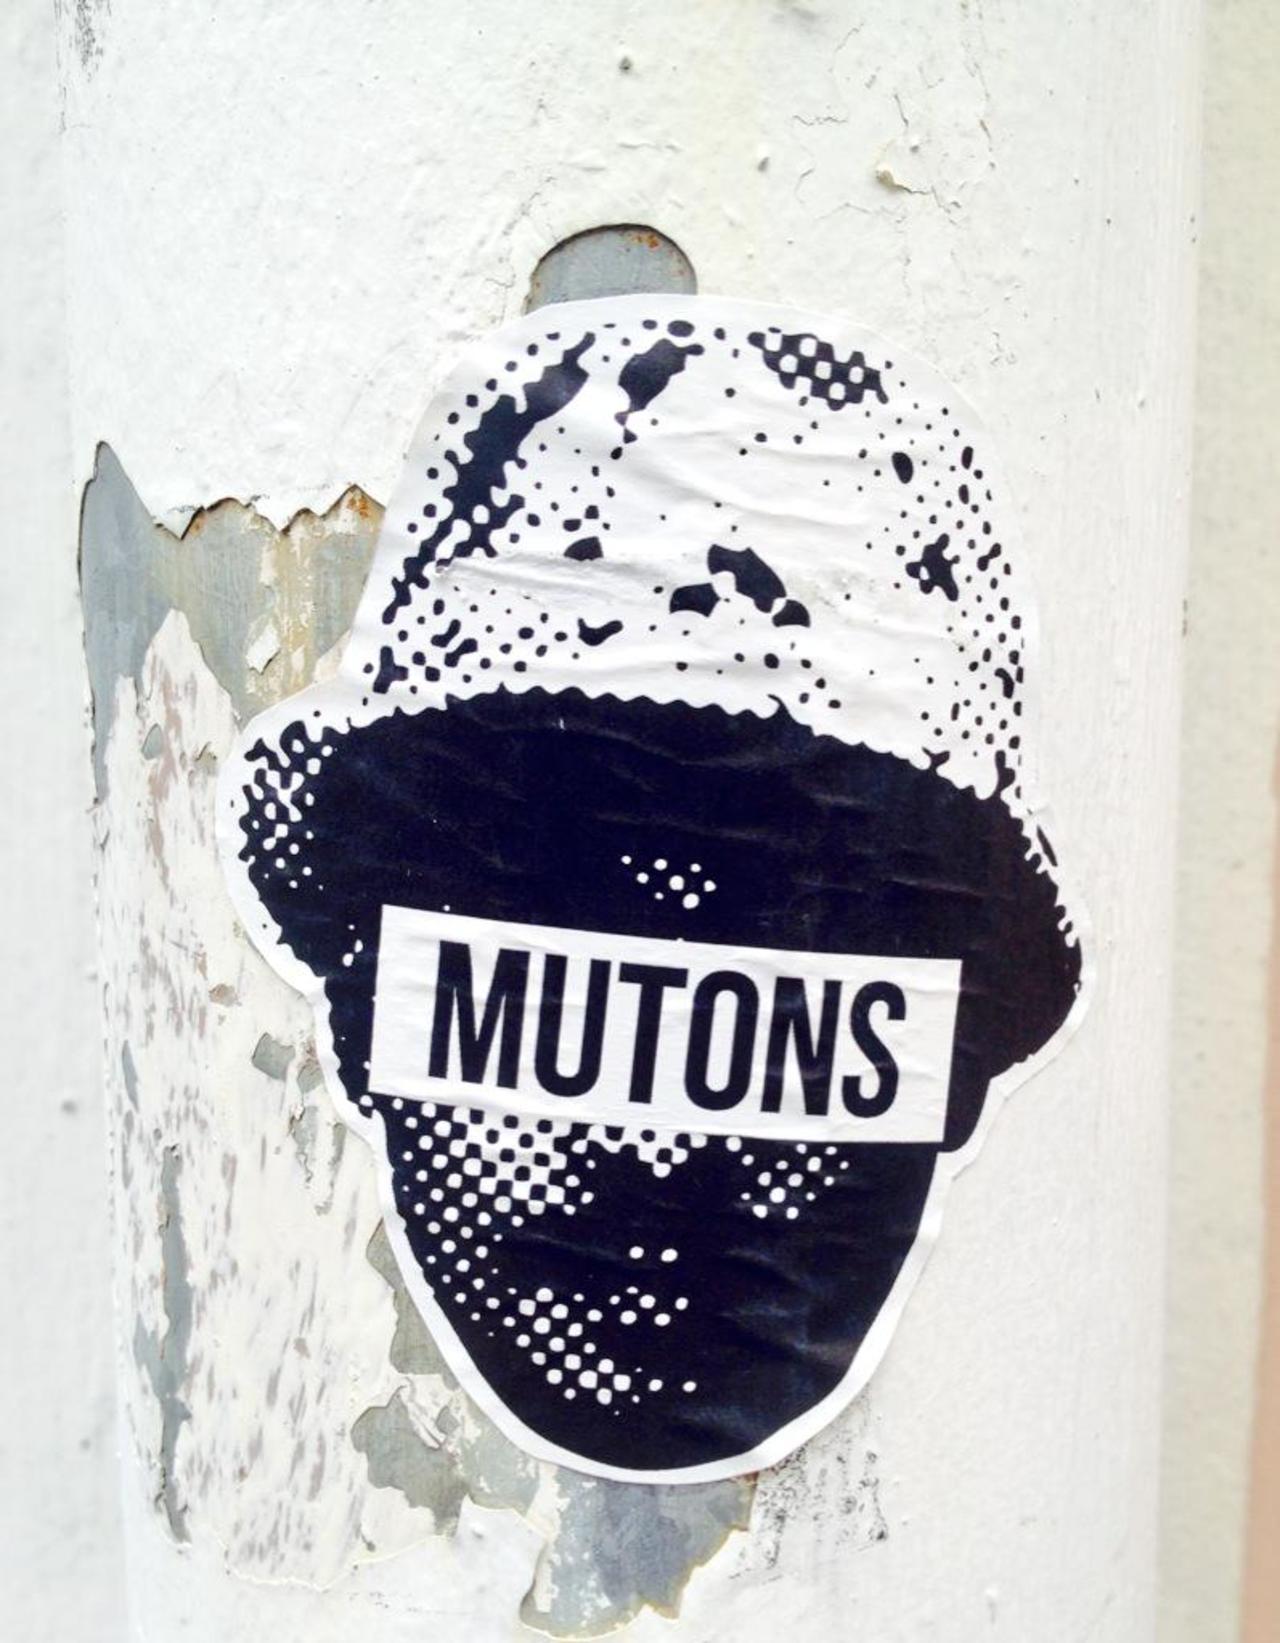 RT @Poximity: MUTONS
#streetart #UrbanArt #urbanaenlabasica #Graffiti #graffitiart #stickerlicious #stickerart #mutons #sticker http://t.co/IPNWWuL9n8